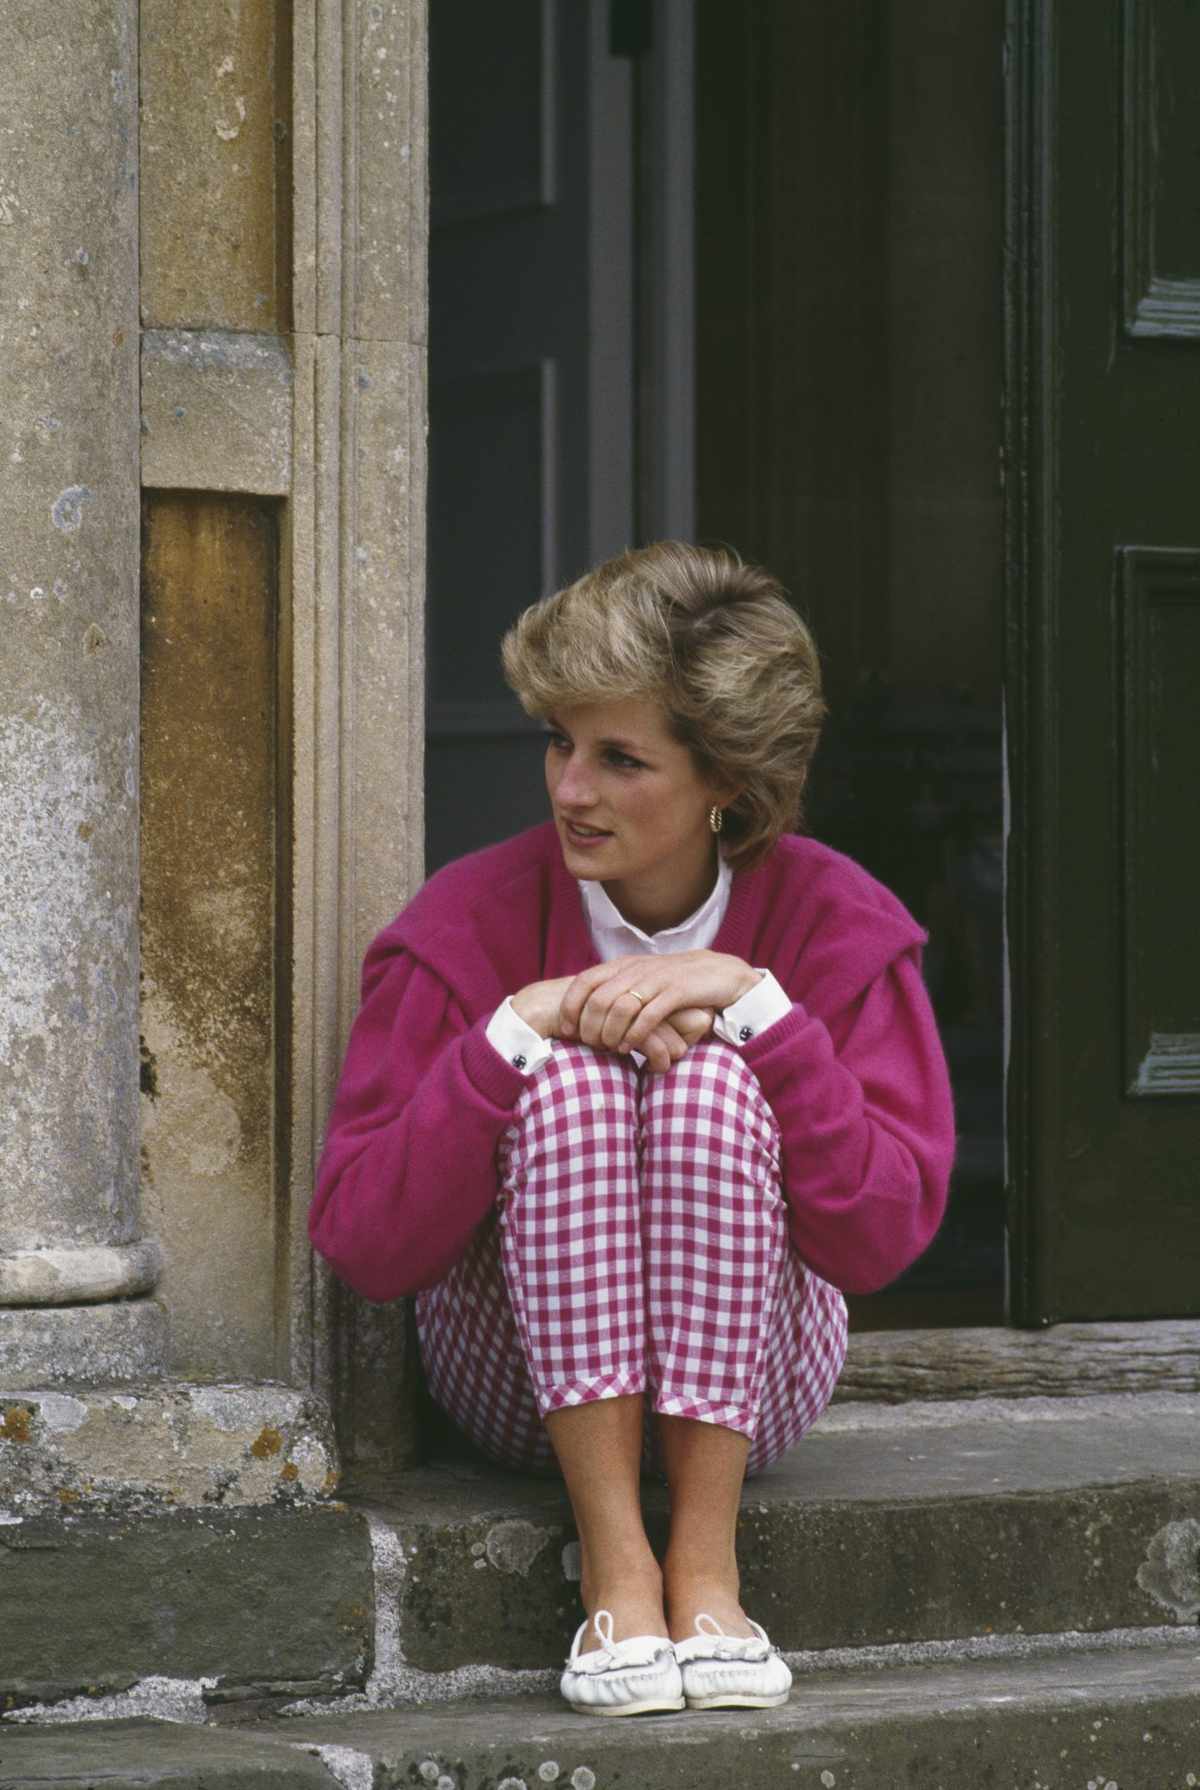 Princess Diana Outfits